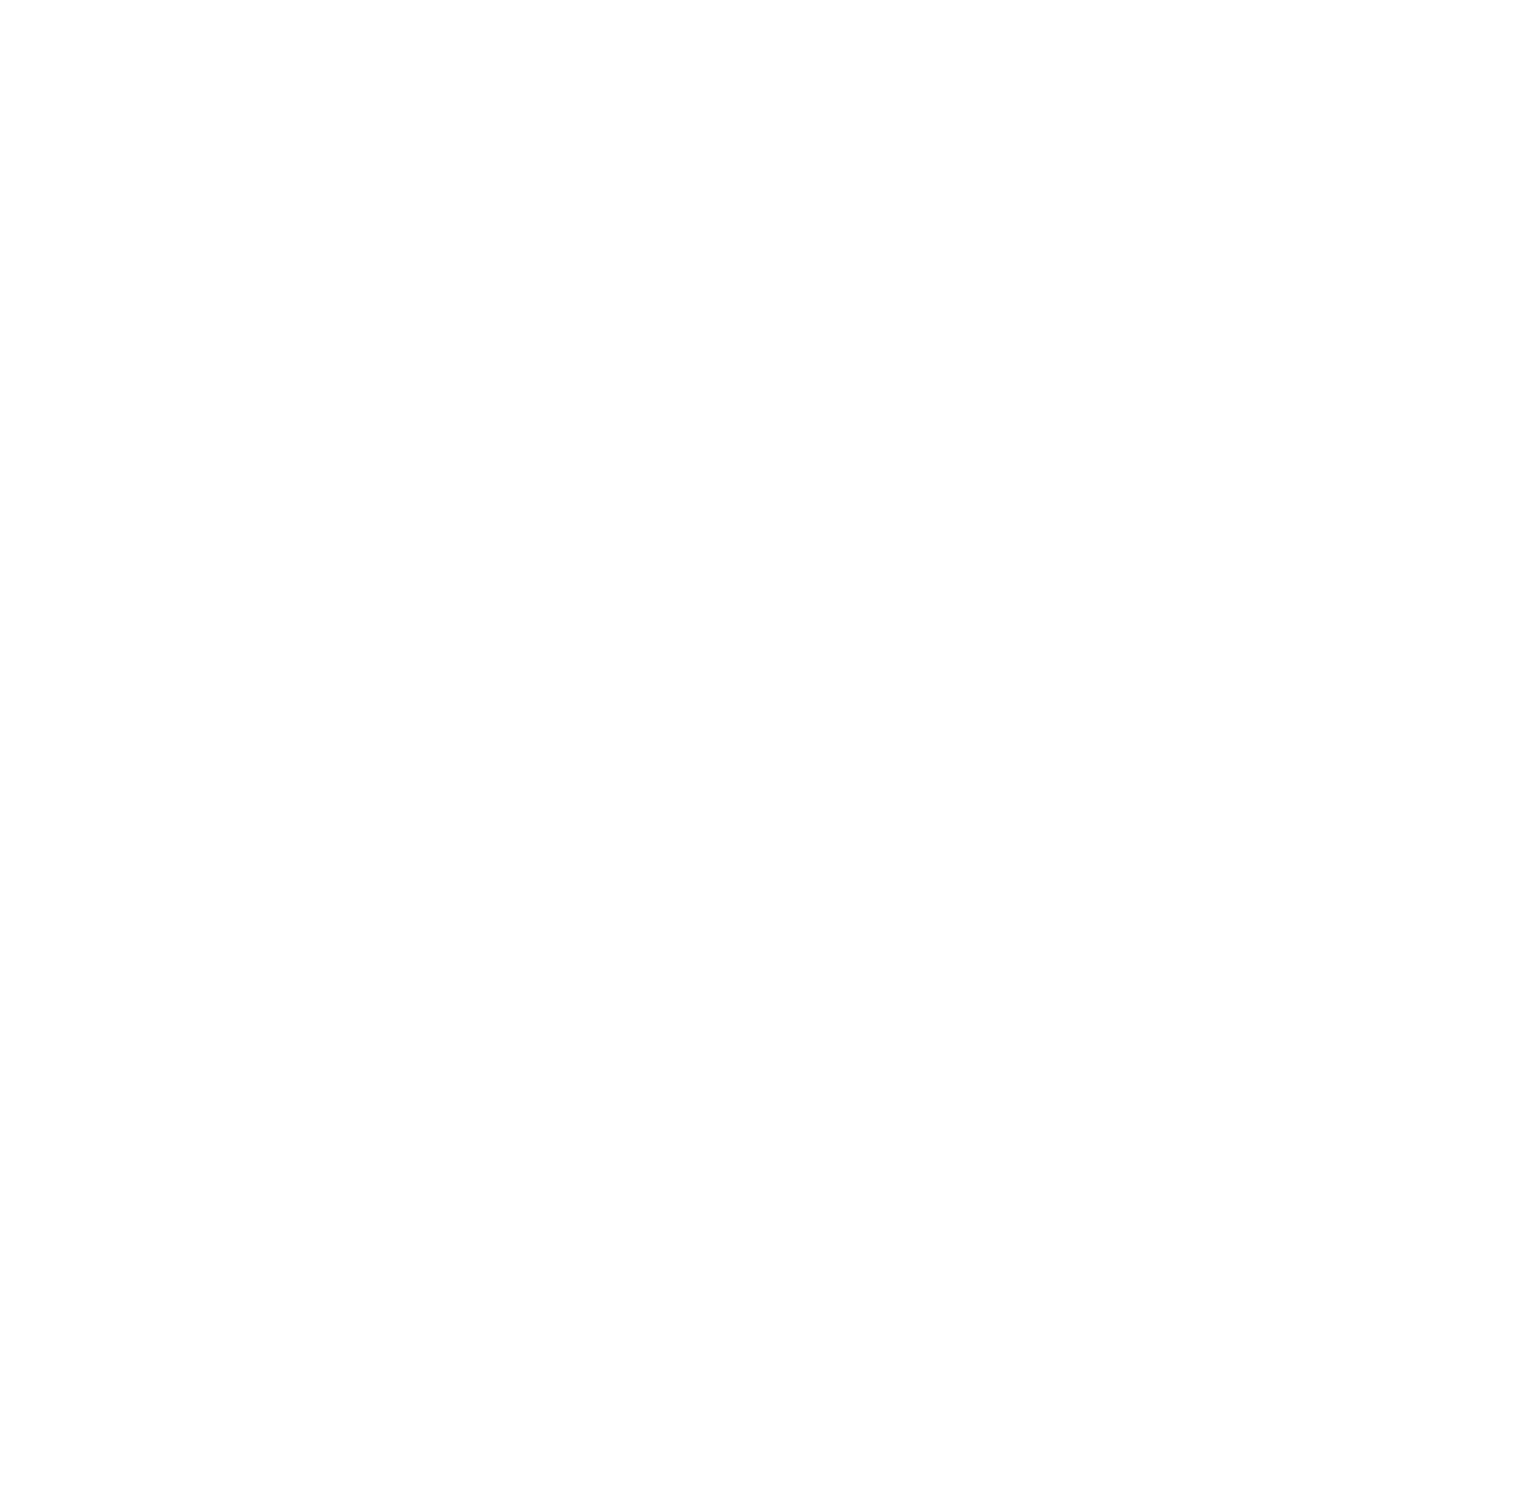 Arhaus logo for dark backgrounds (transparent PNG)